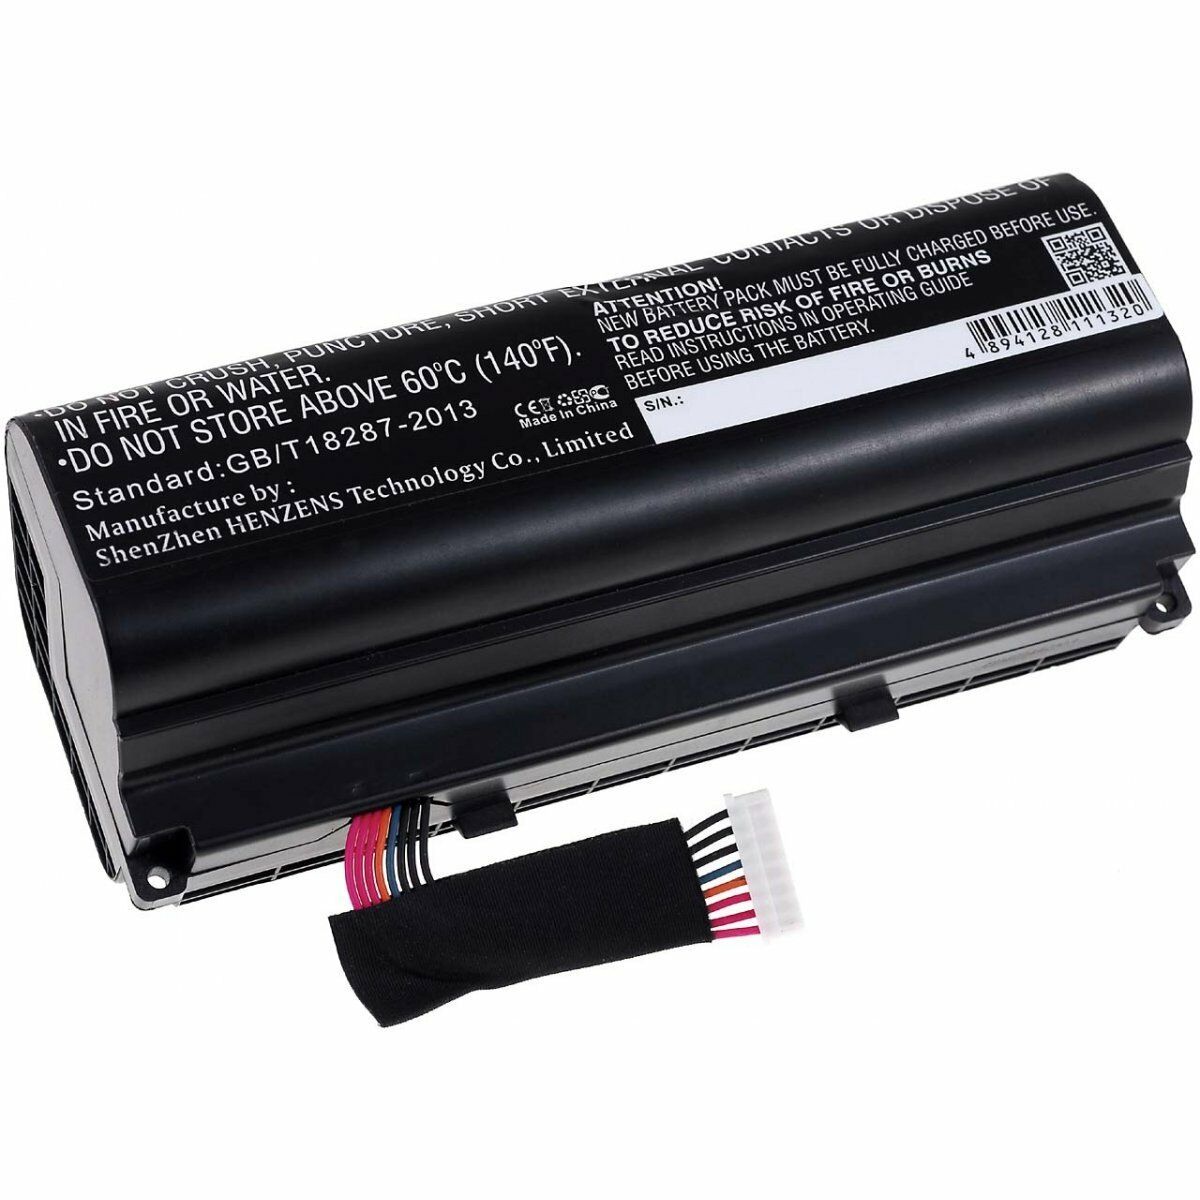 Asus G751J, G751J-BHI7T25, G751JL-BSi7T28 15V Li-Ion compatible battery